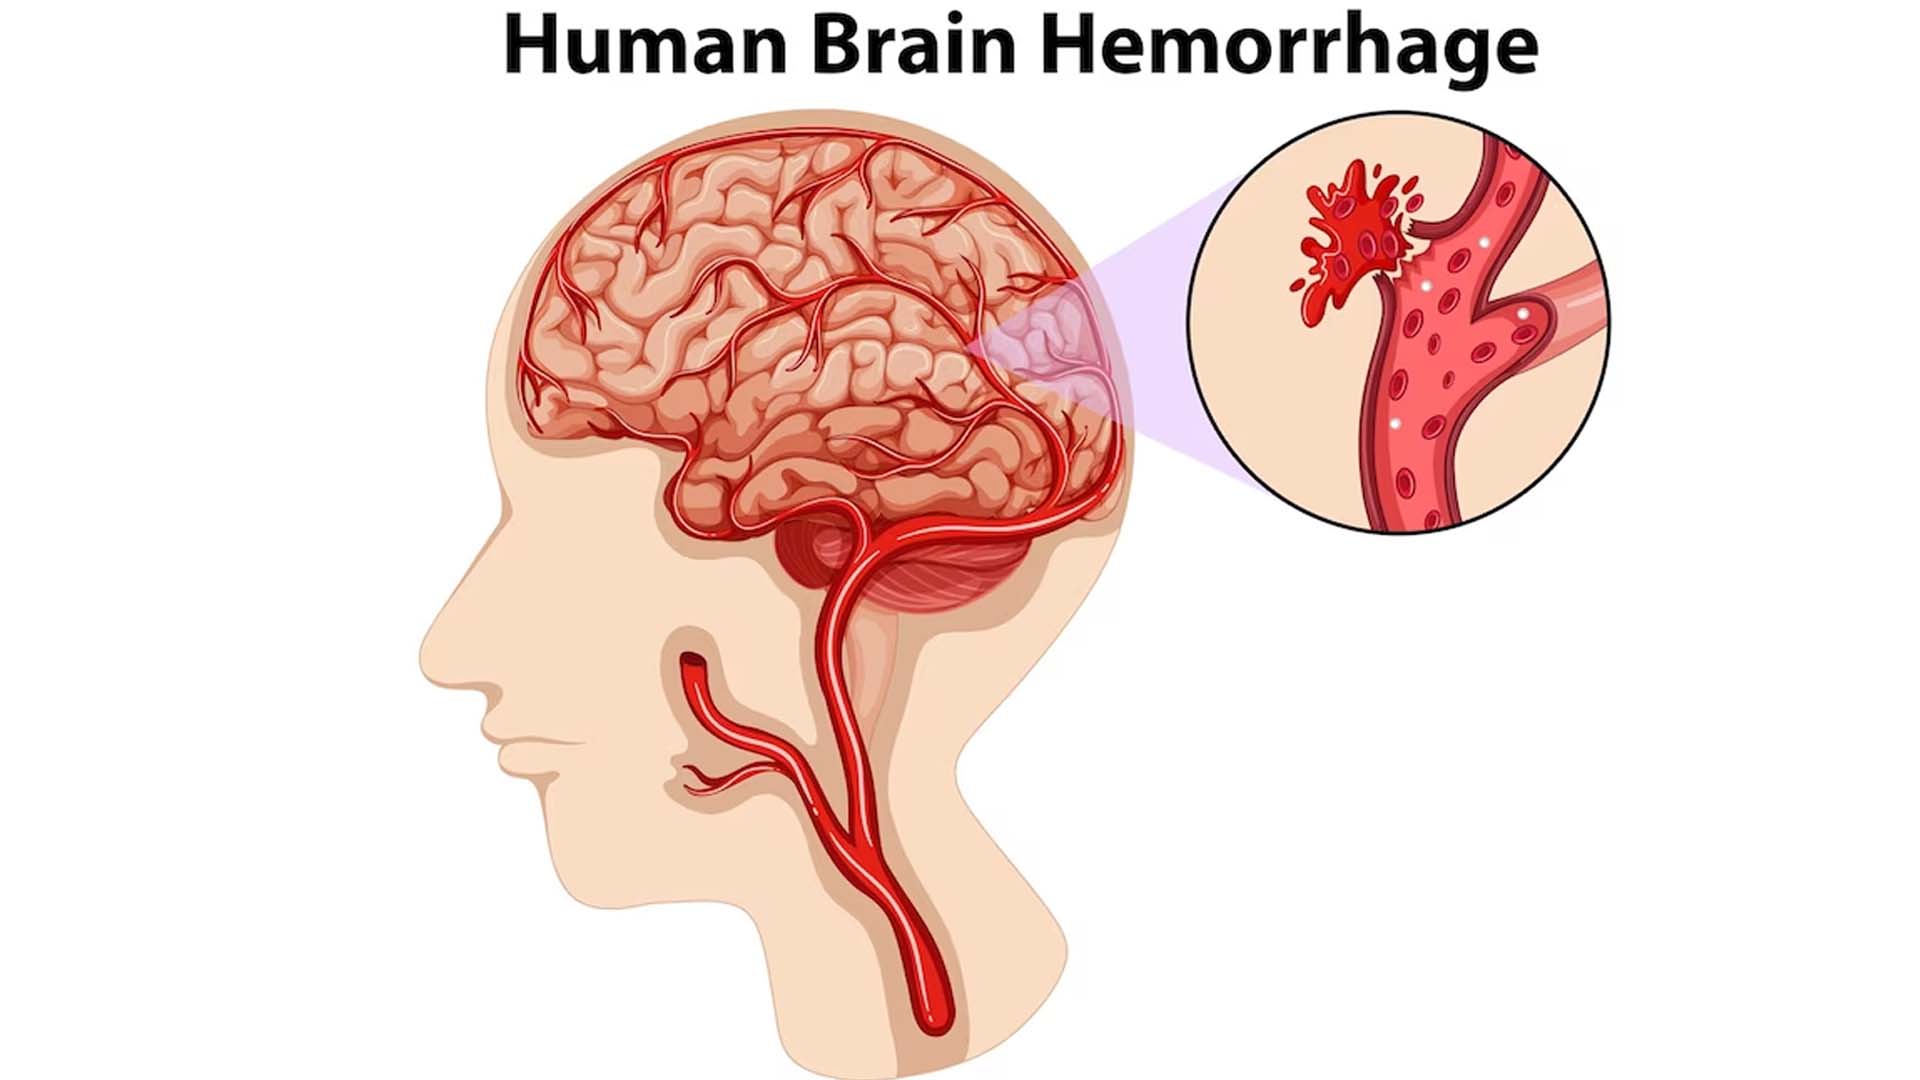 Cerebral hemorrhage or Intracranial hemorrhage